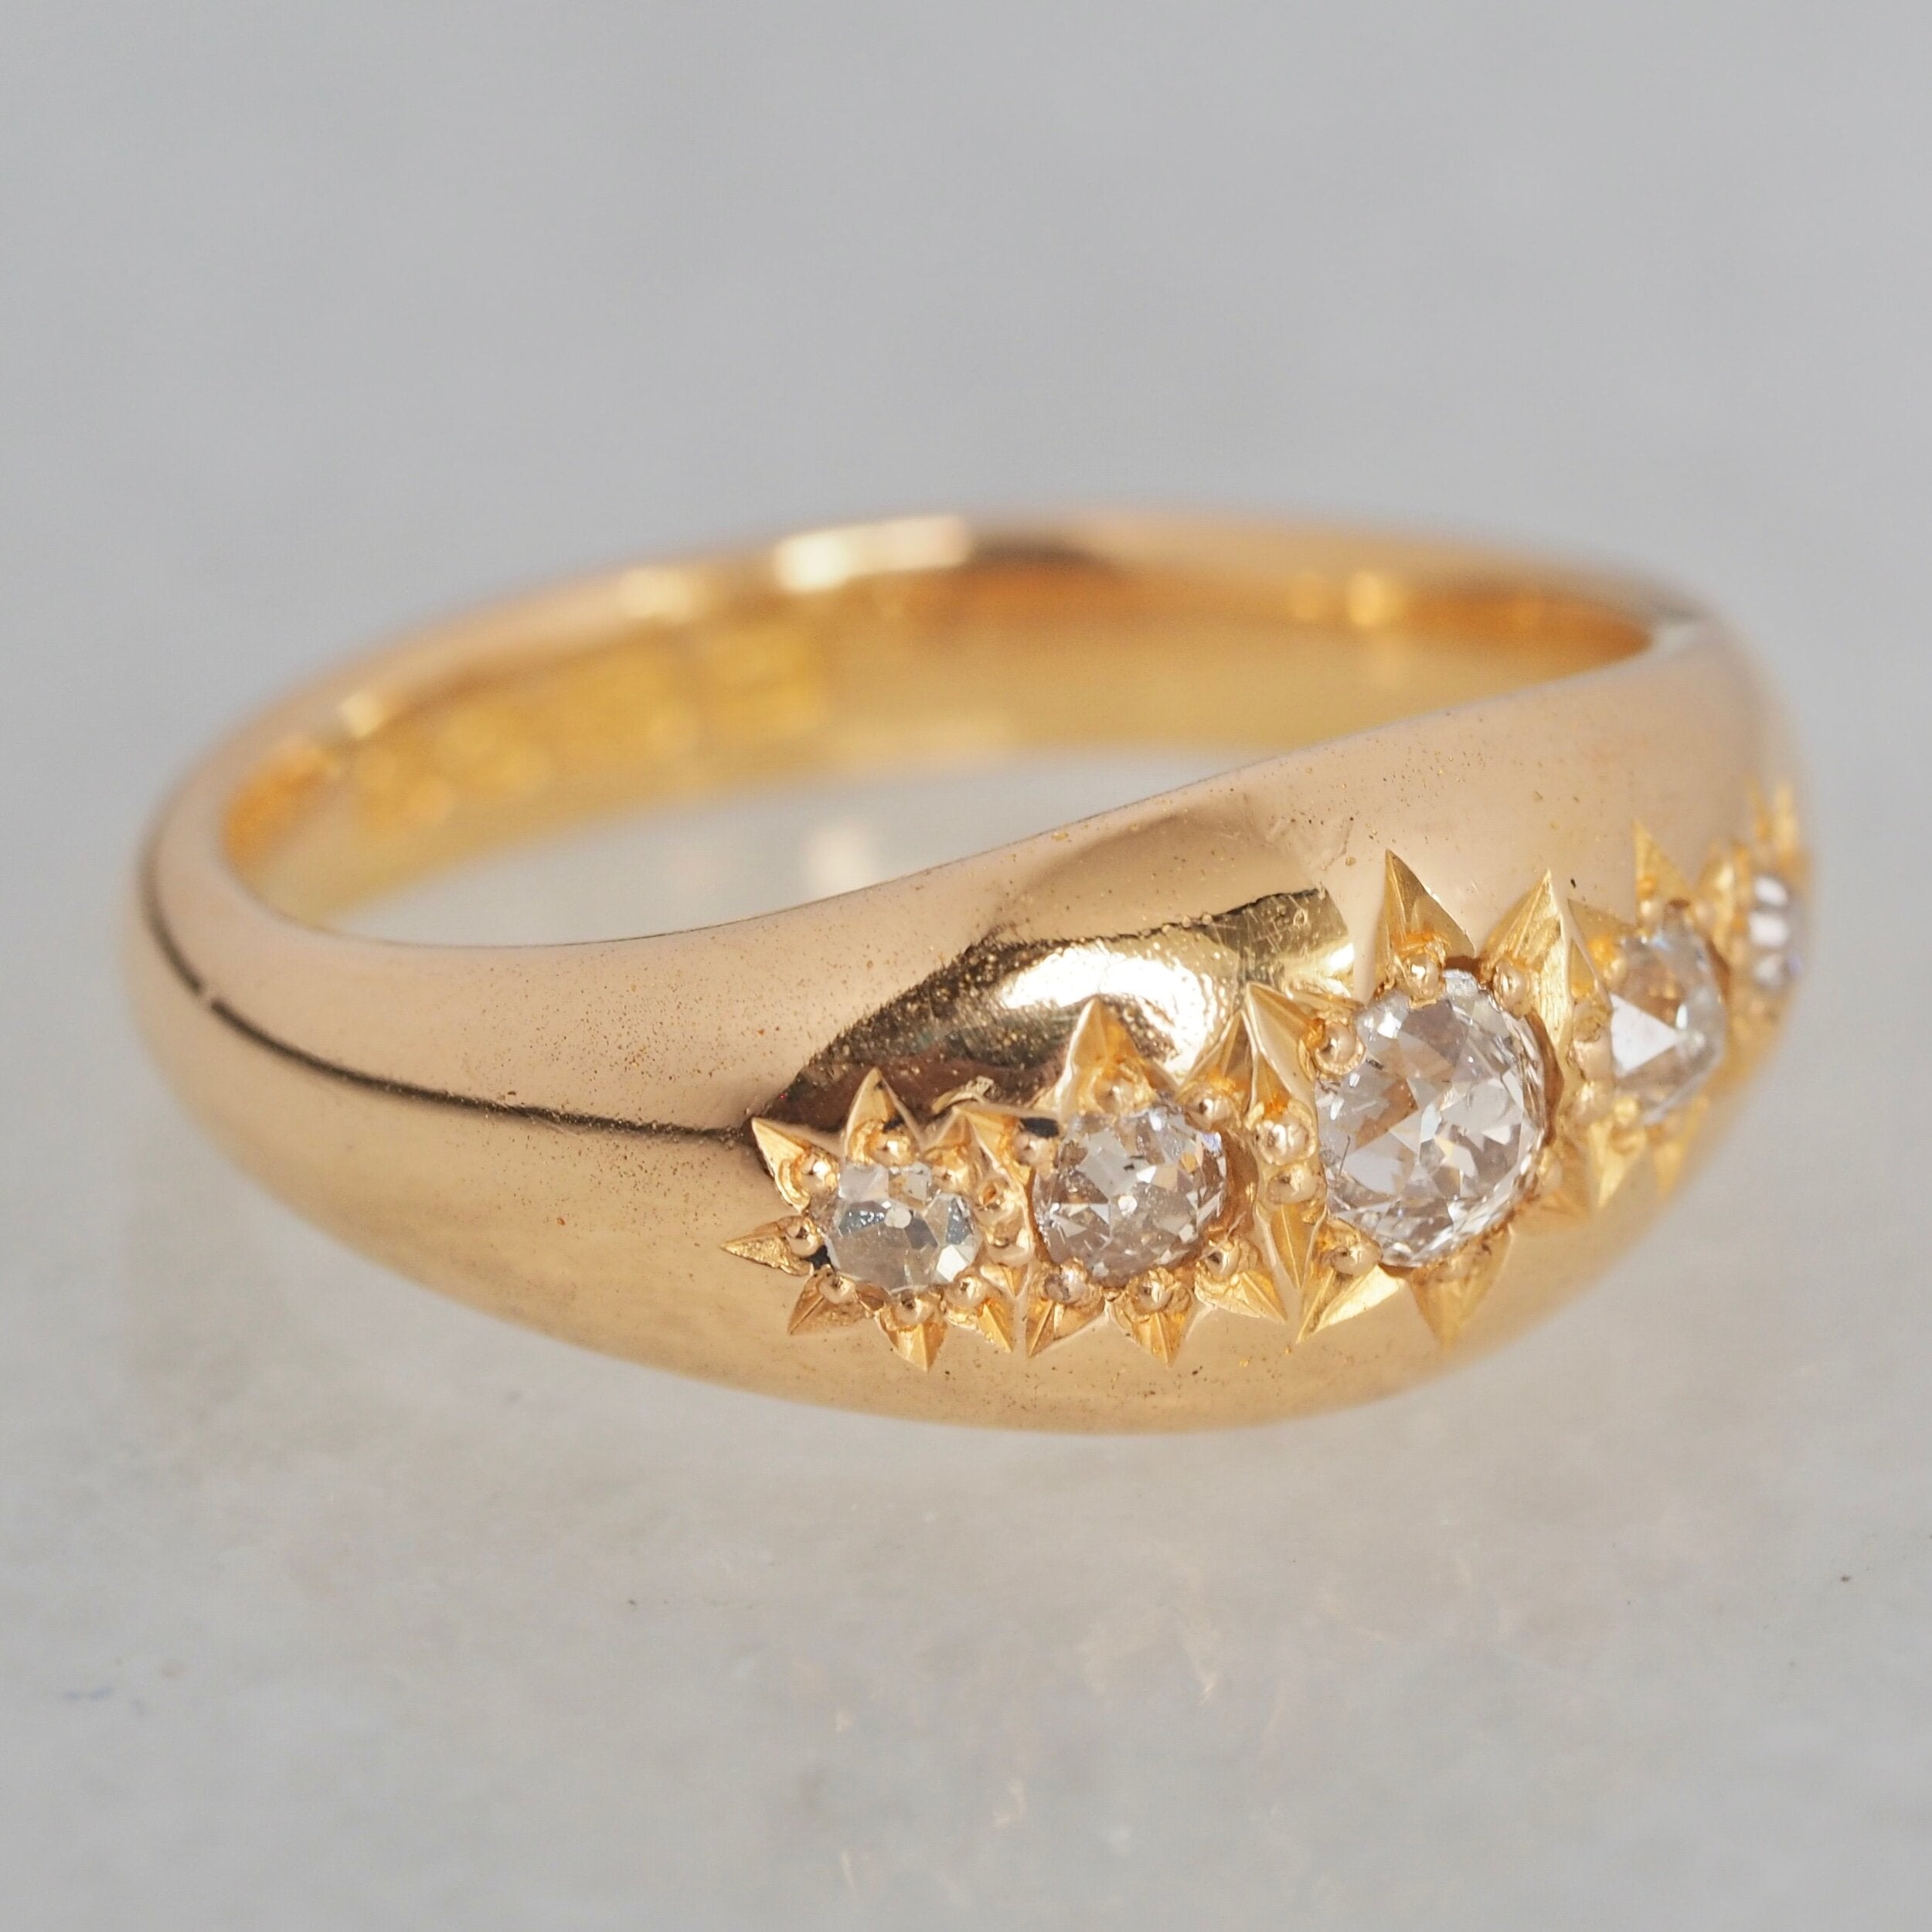 Antique Victorian c. 1853 22k Gold 5 Stone Old Mine Cut Diamond Ring